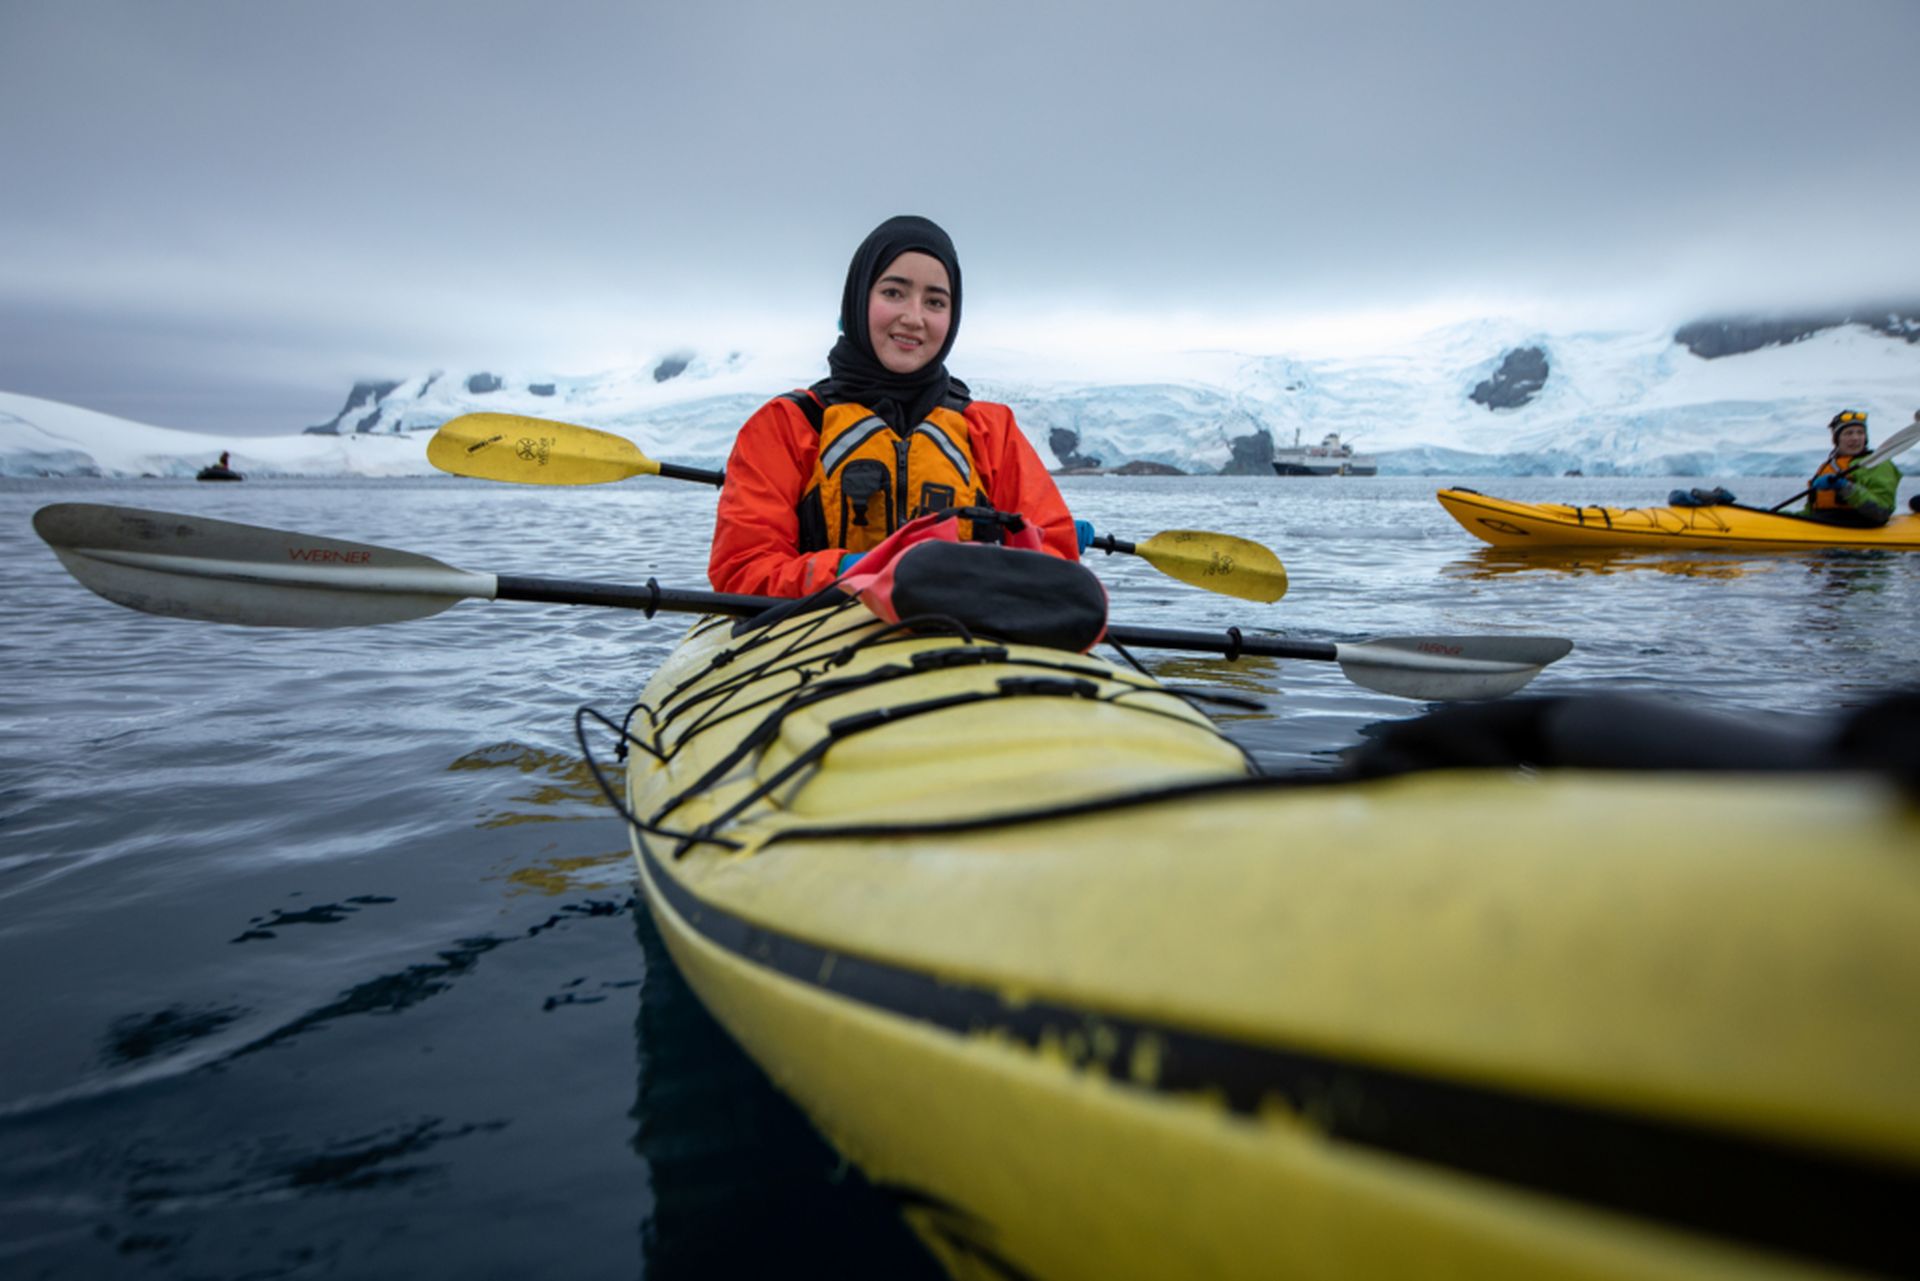 Sadra Kayaking in Antarctica